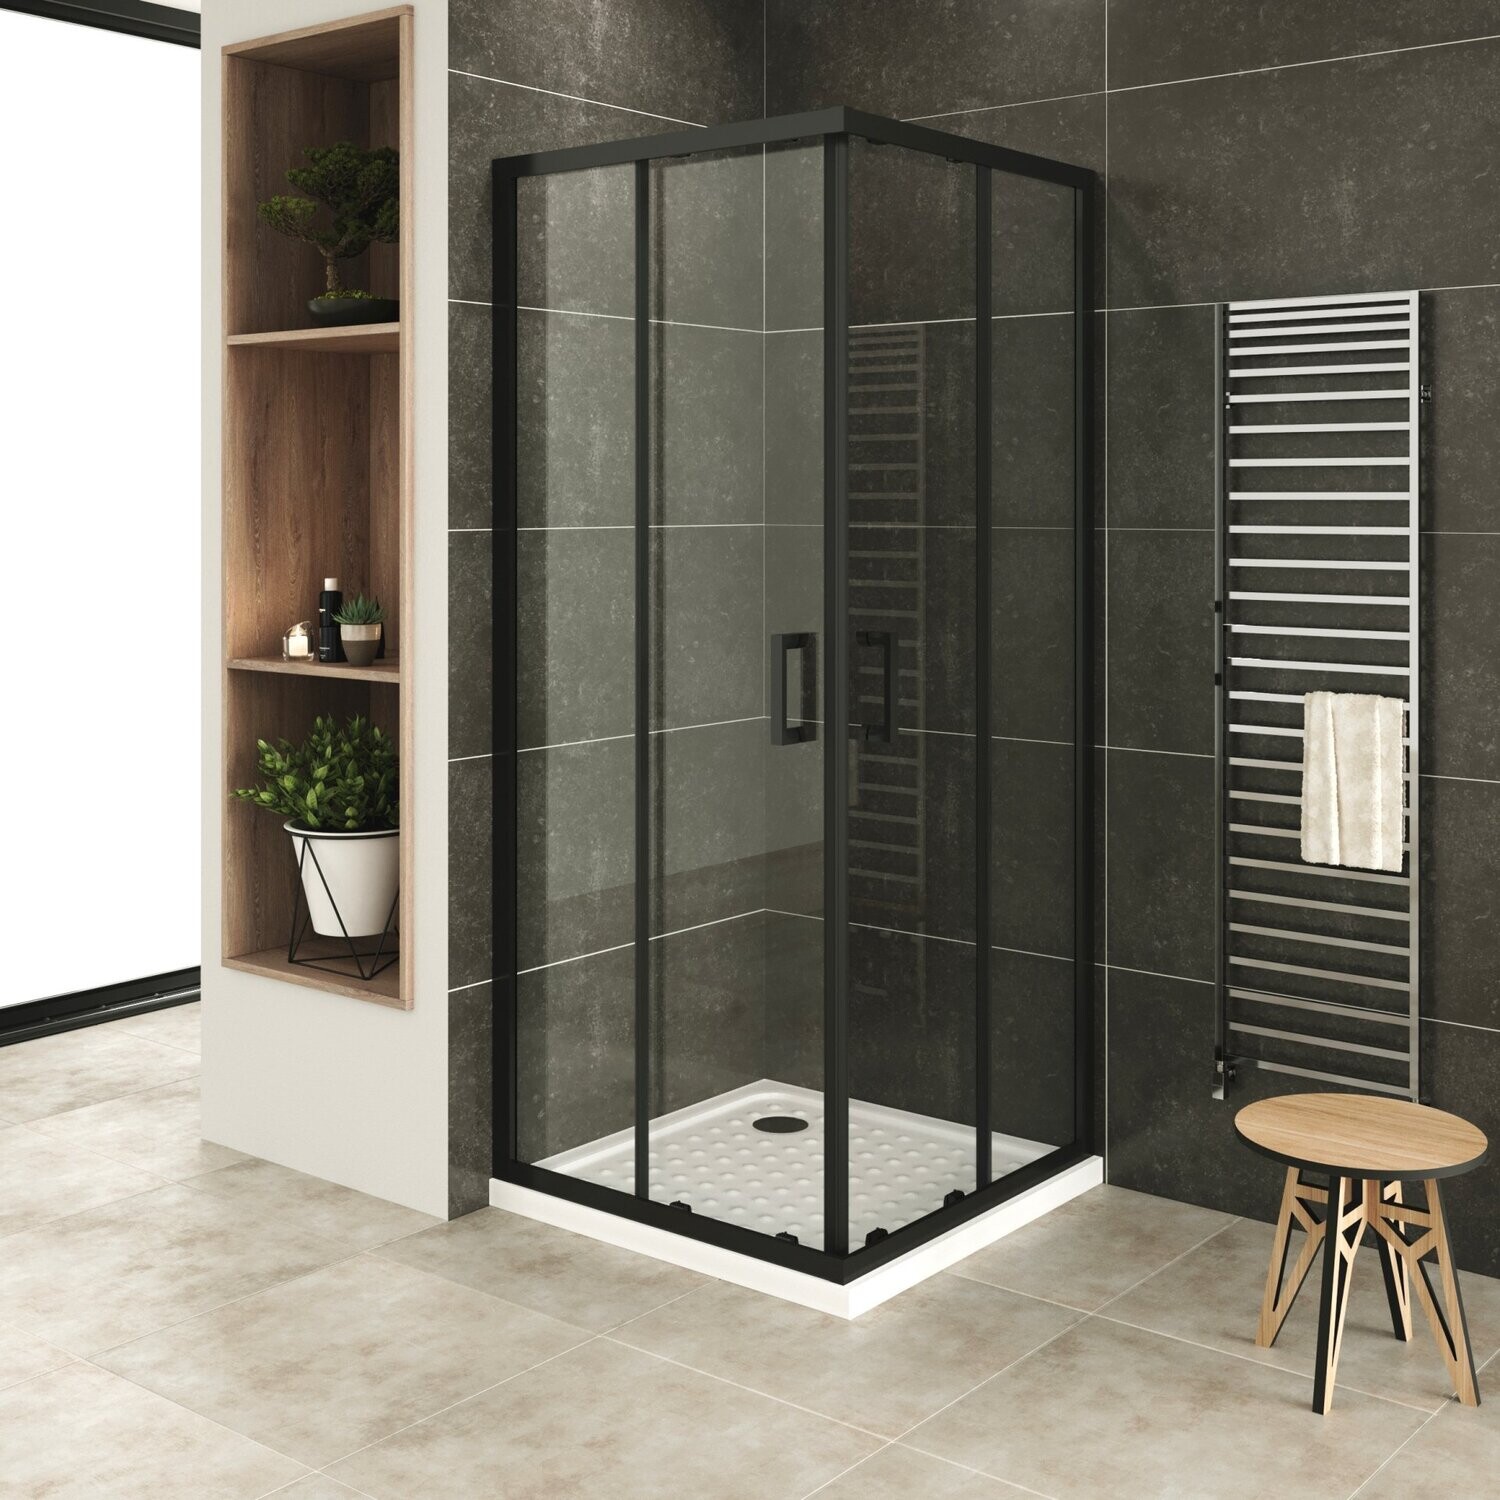 Cabine de duche DANIELLE | Altura 190 cm | Vidro Transparente